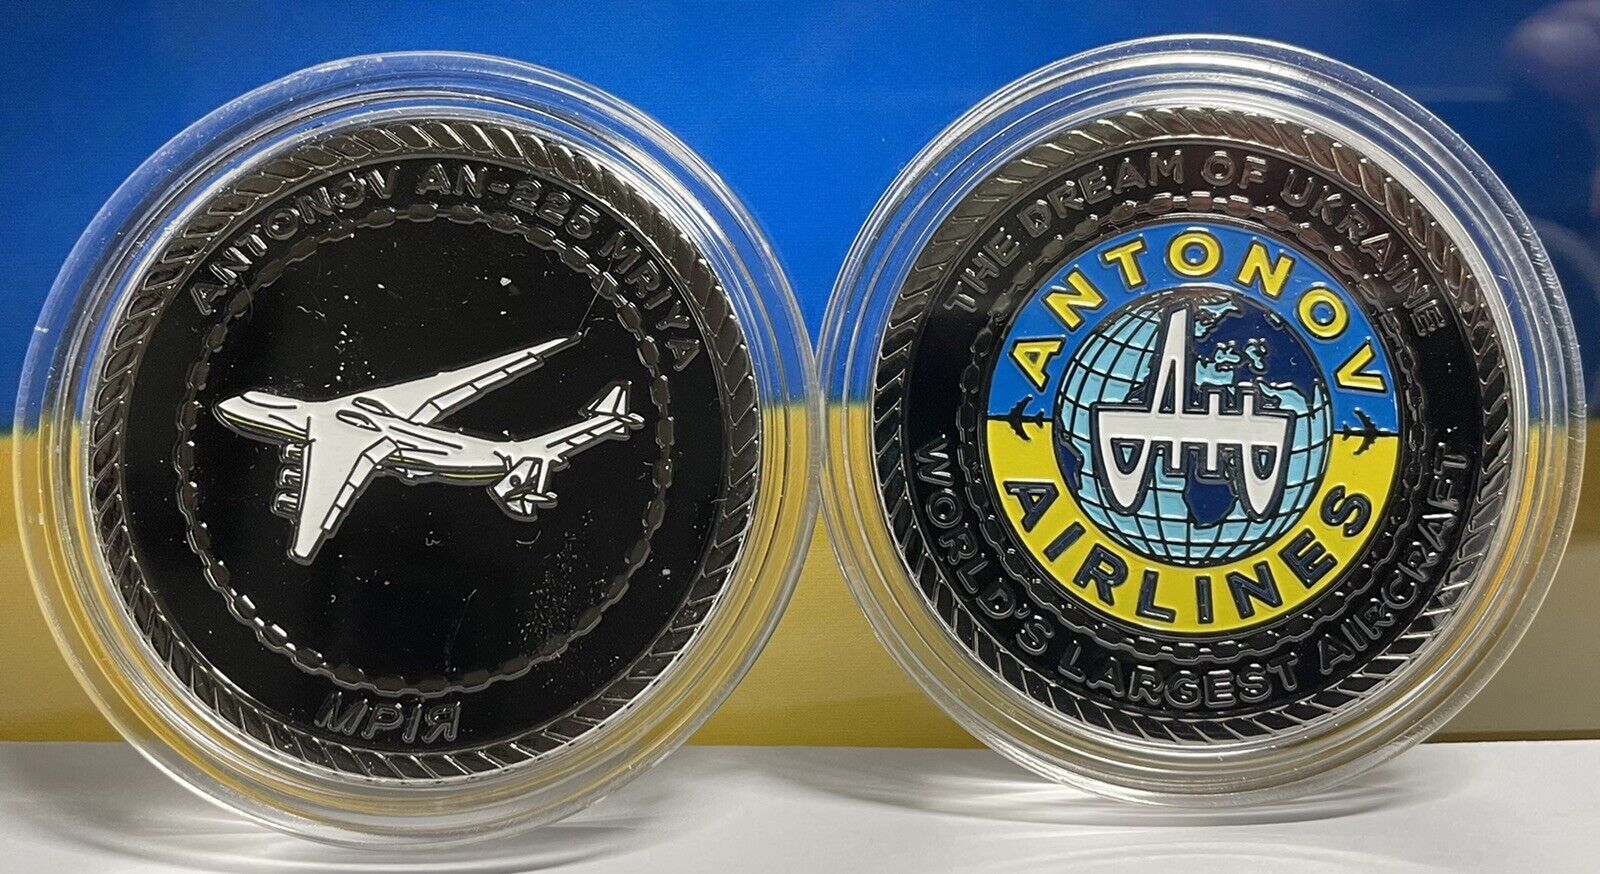 AN-225 MRIYA Antonov Airlines Challenge Coin